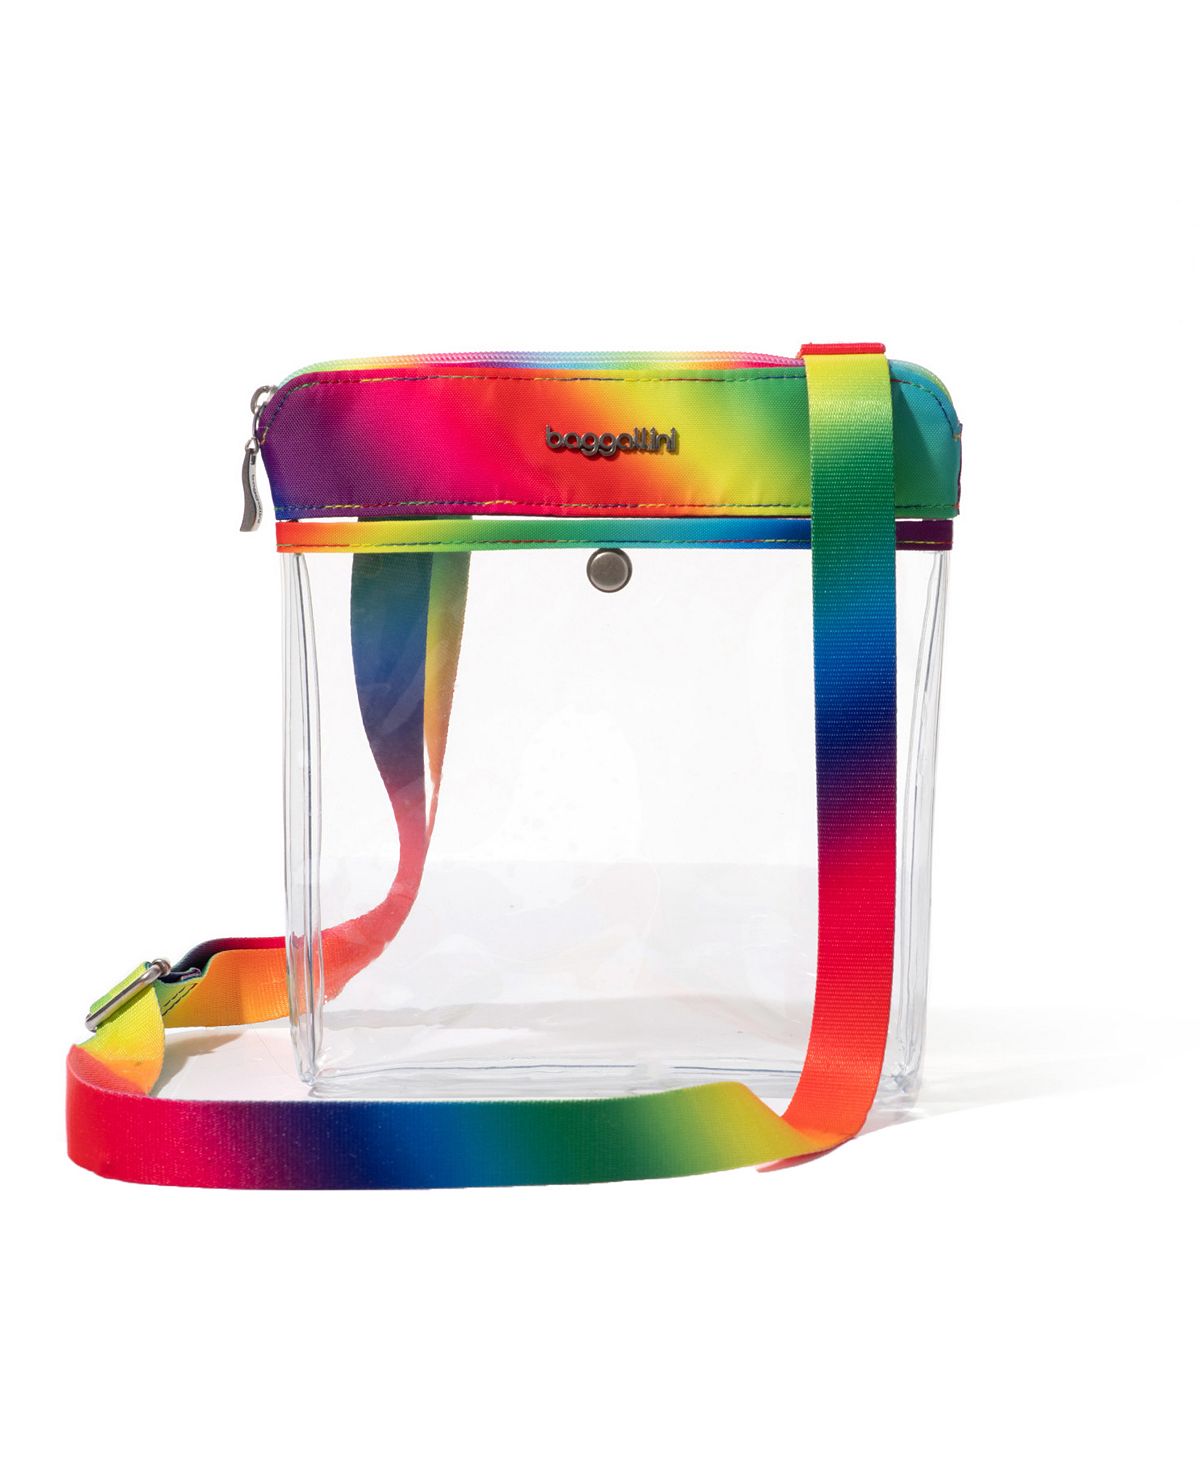 Прозрачная сумка через плечо с карманами Pride Stadium Baggallini lgbt pride day gay rainbow headband handband bandana scarf